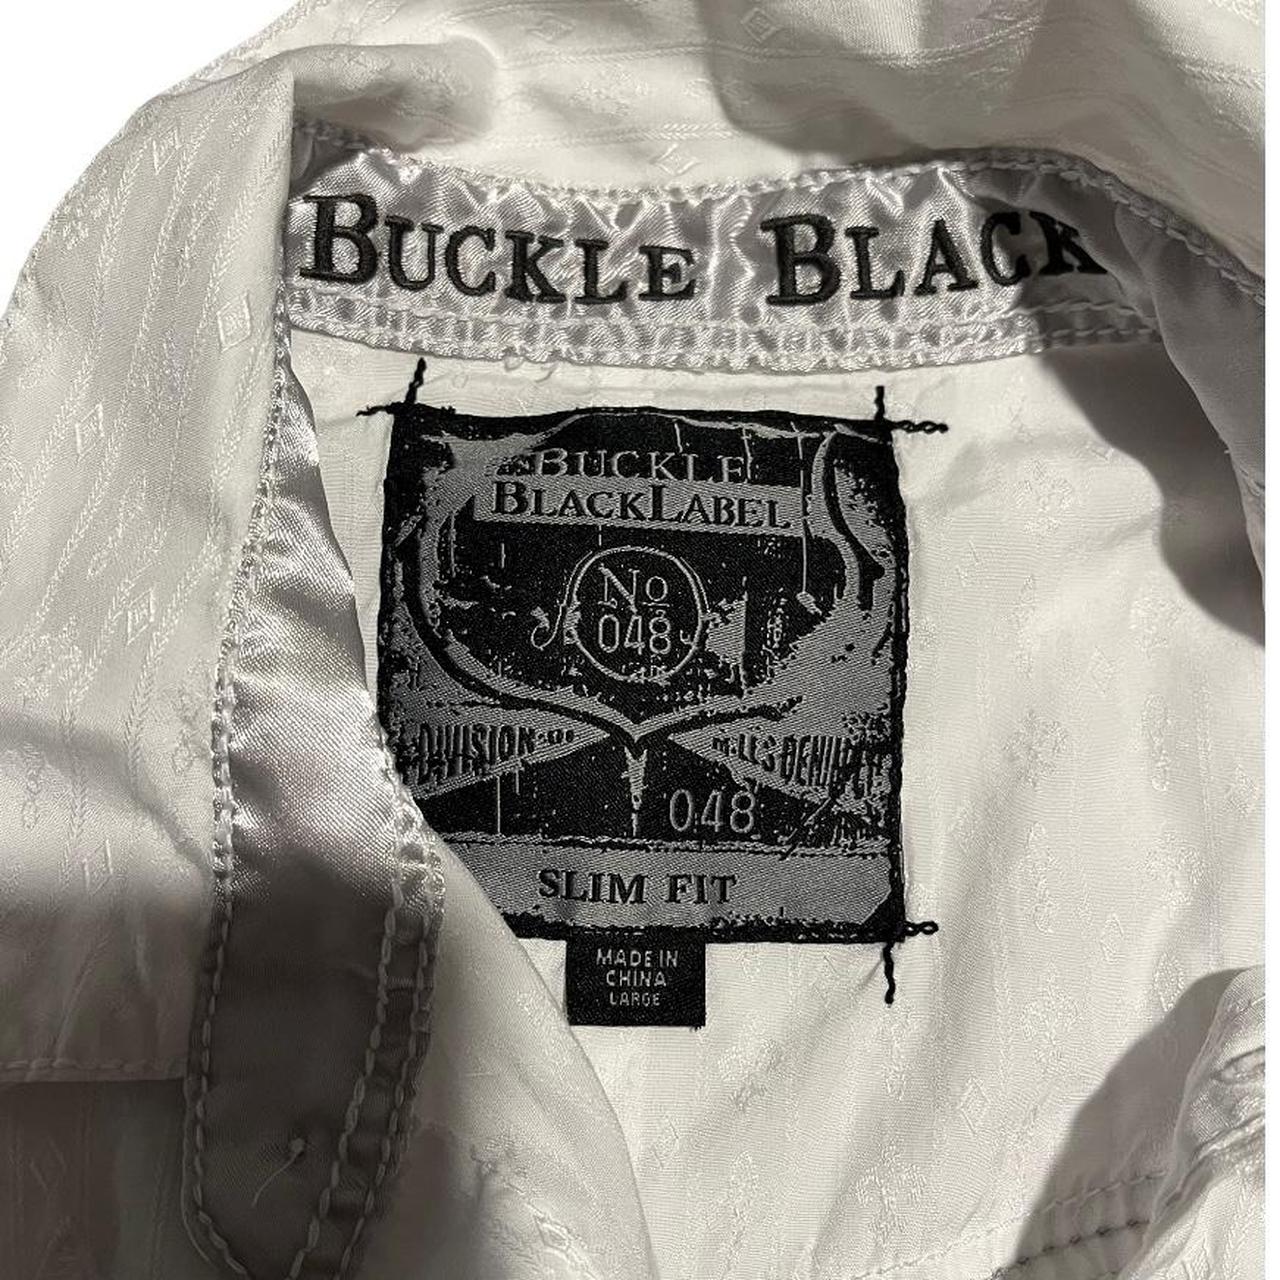 Buckle Black Men's White and Black Shirt (2)